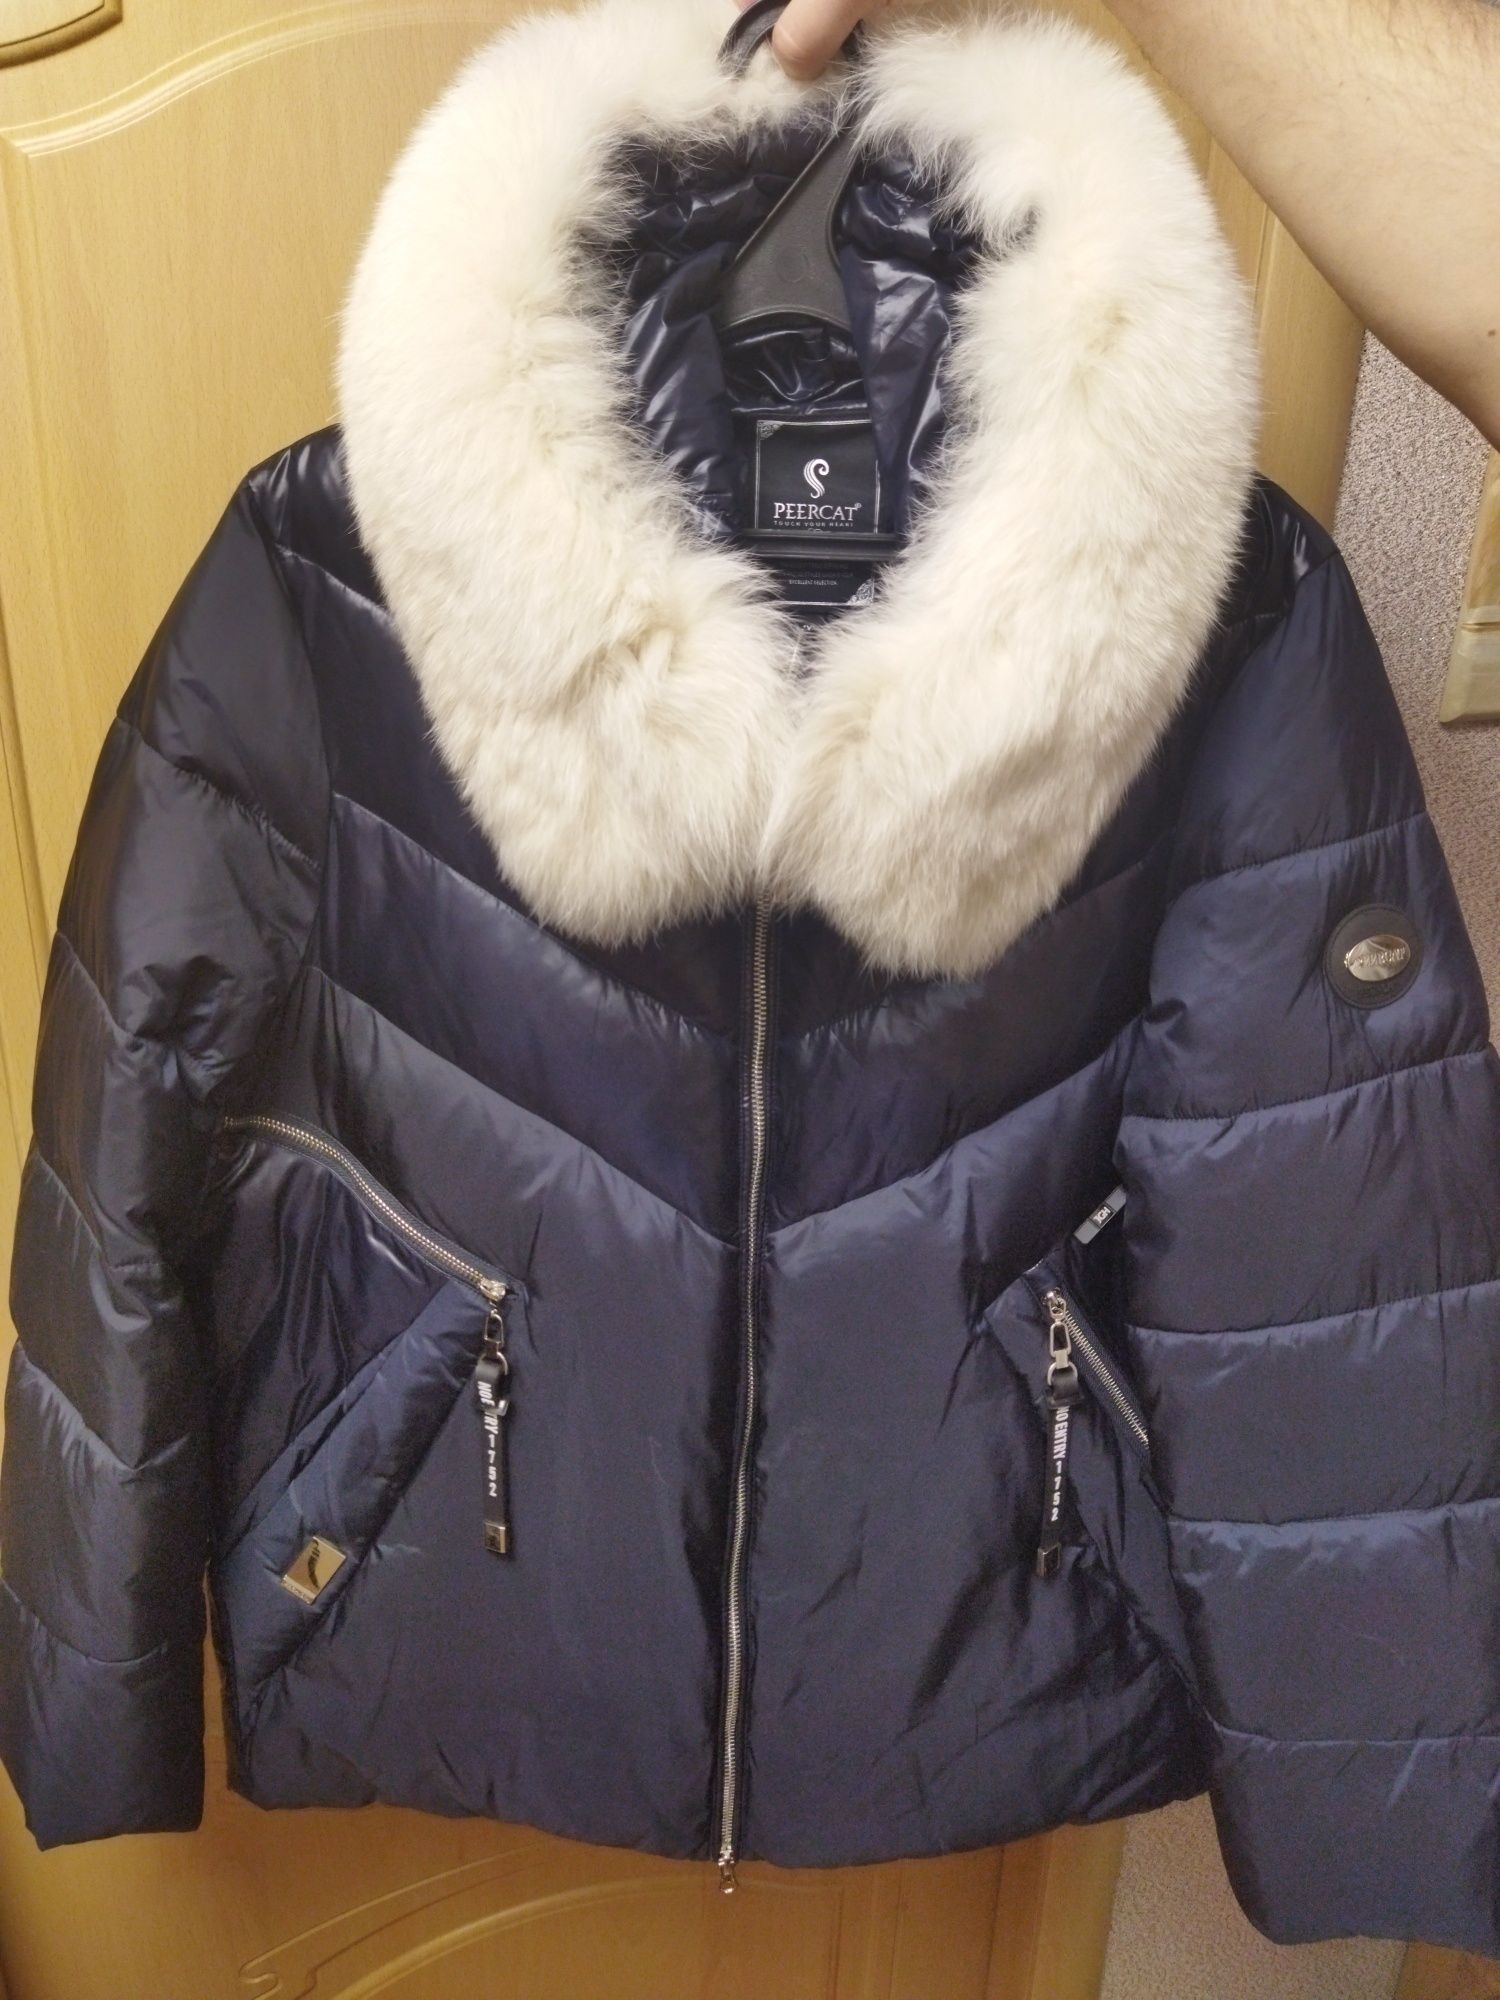 Куртка зимняя женская 54 размер